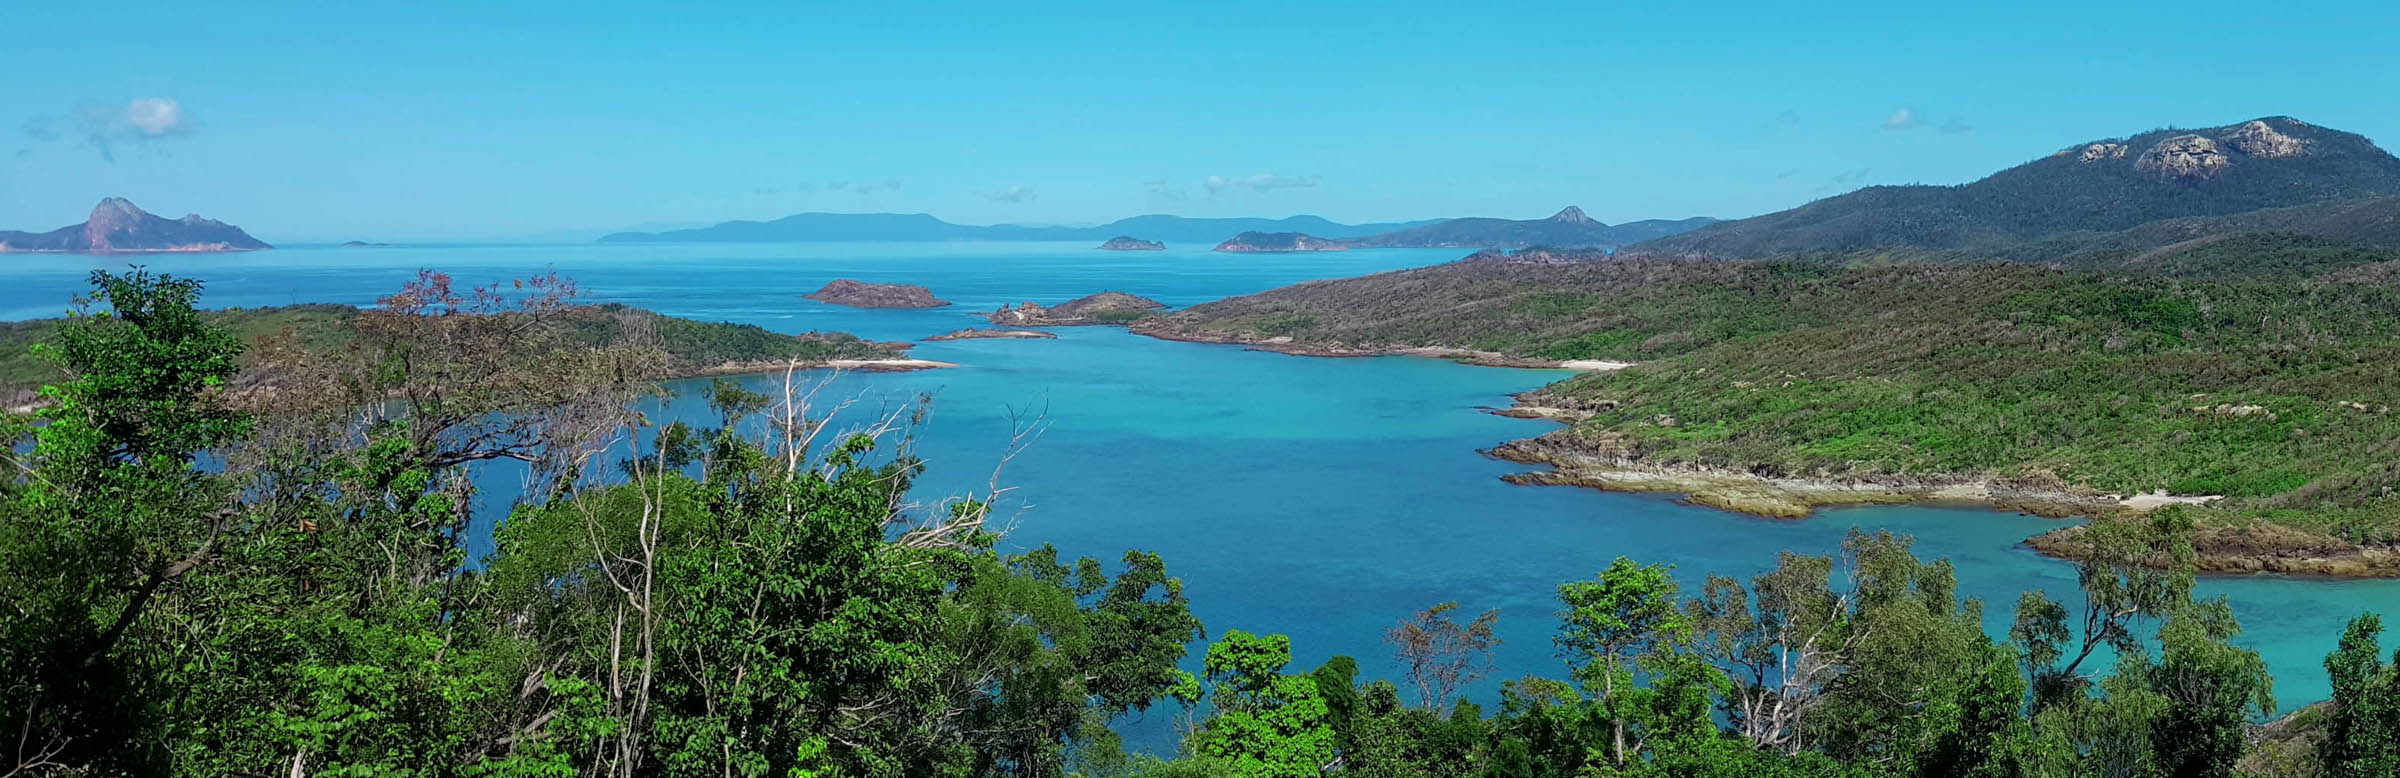 Charter Yachts Australia Whitsunday Islands Beautiful Landscape